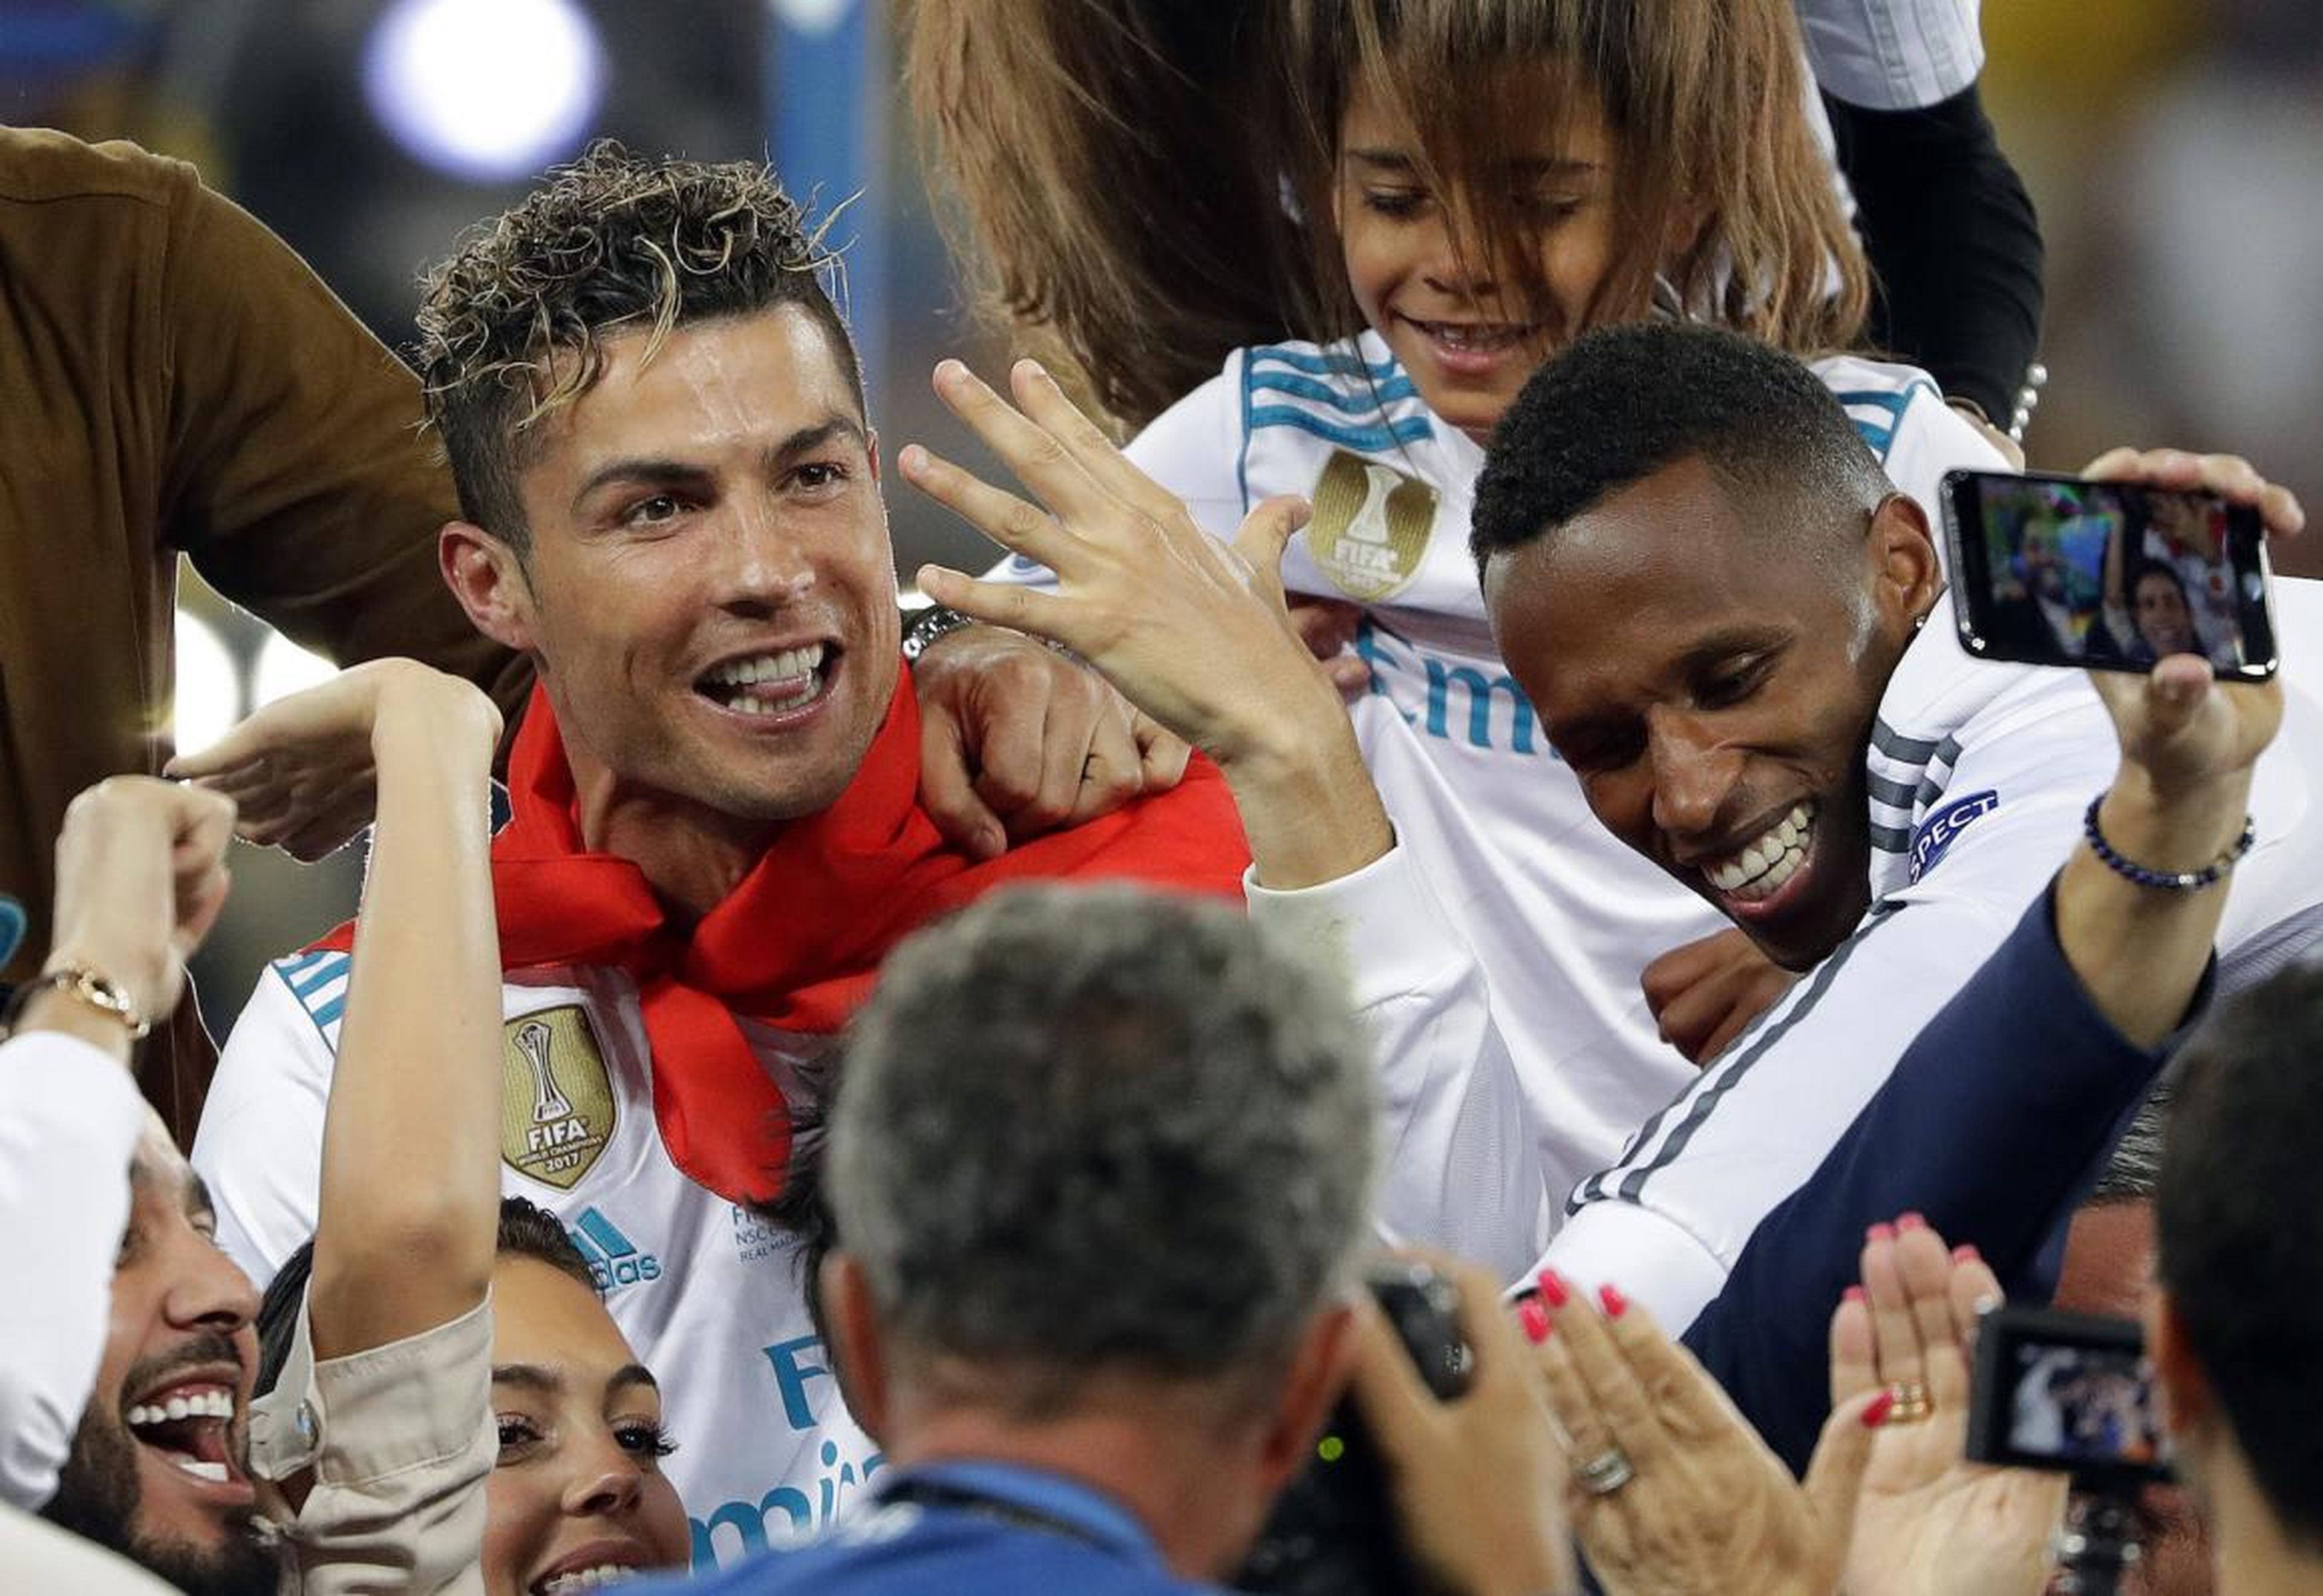 Cristiano Ronaldo — Juventus F.C. and Portugal national team striker.